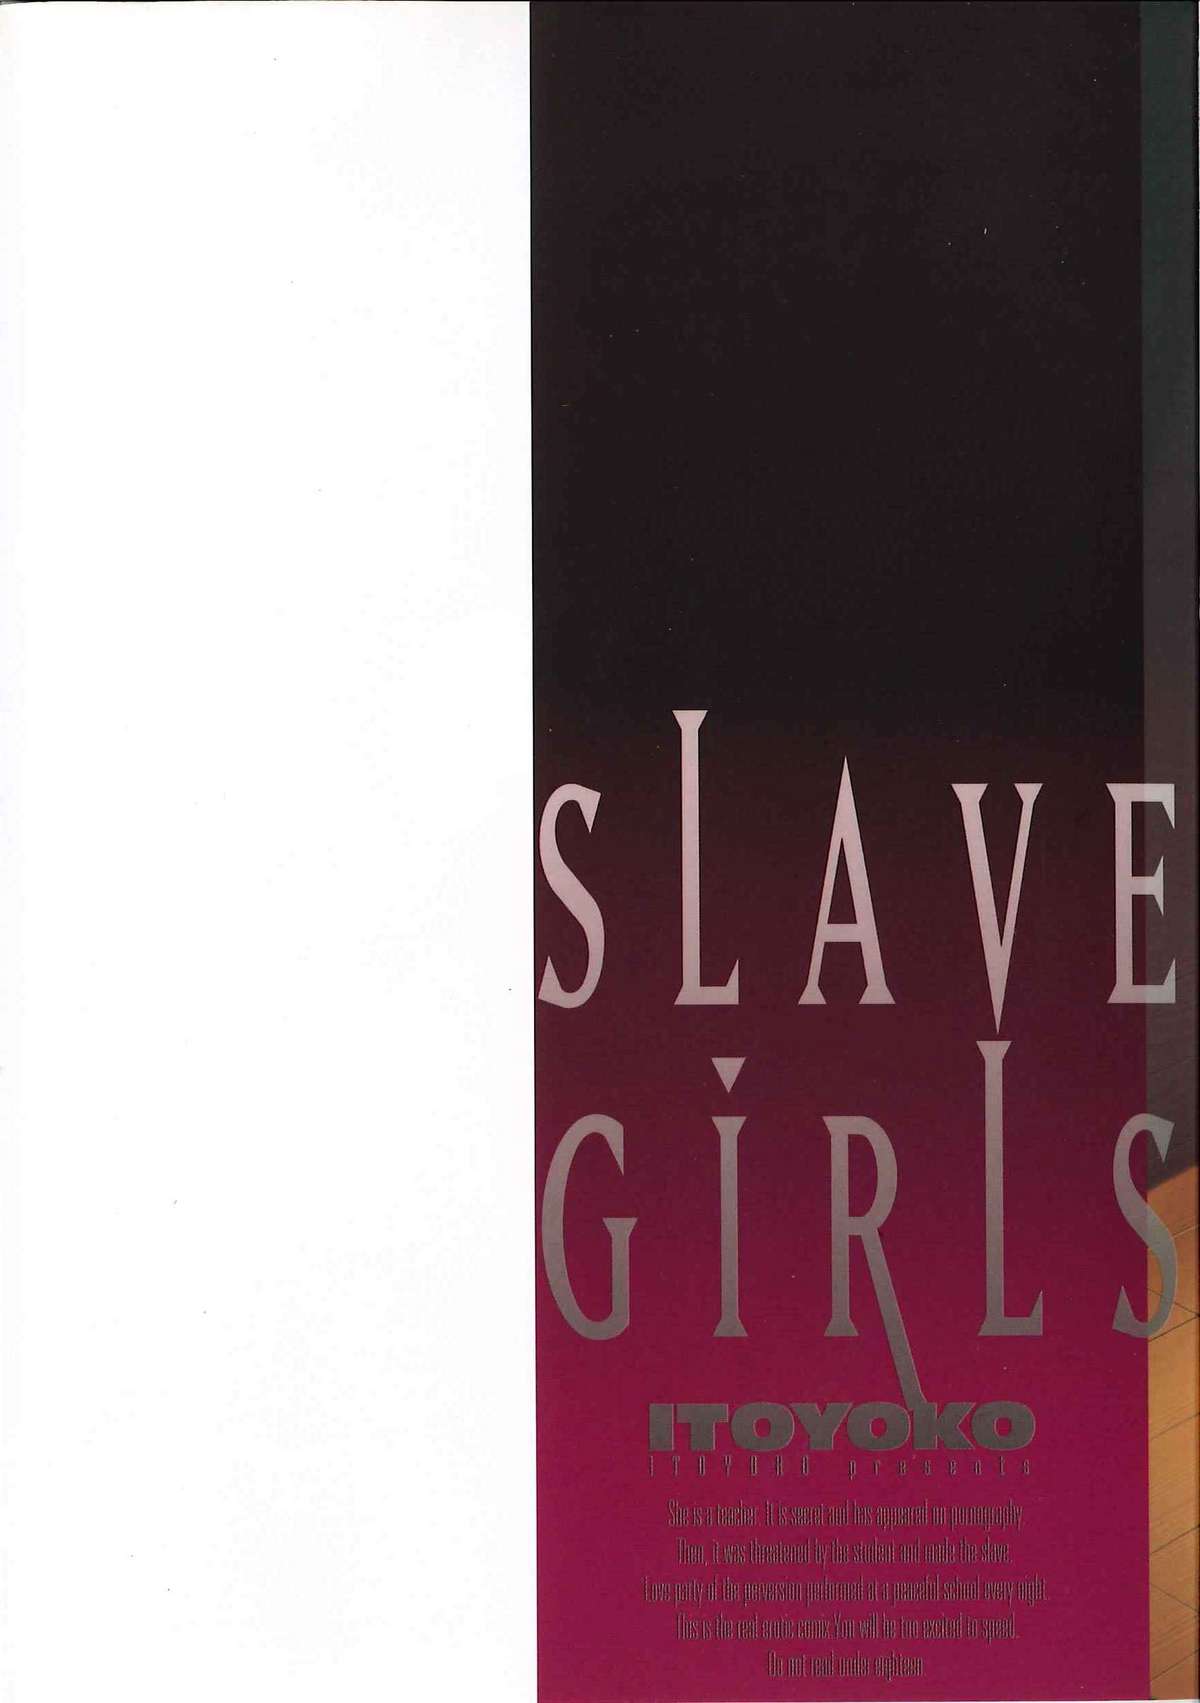 [ITOYOKO] SLAVE GIRLS